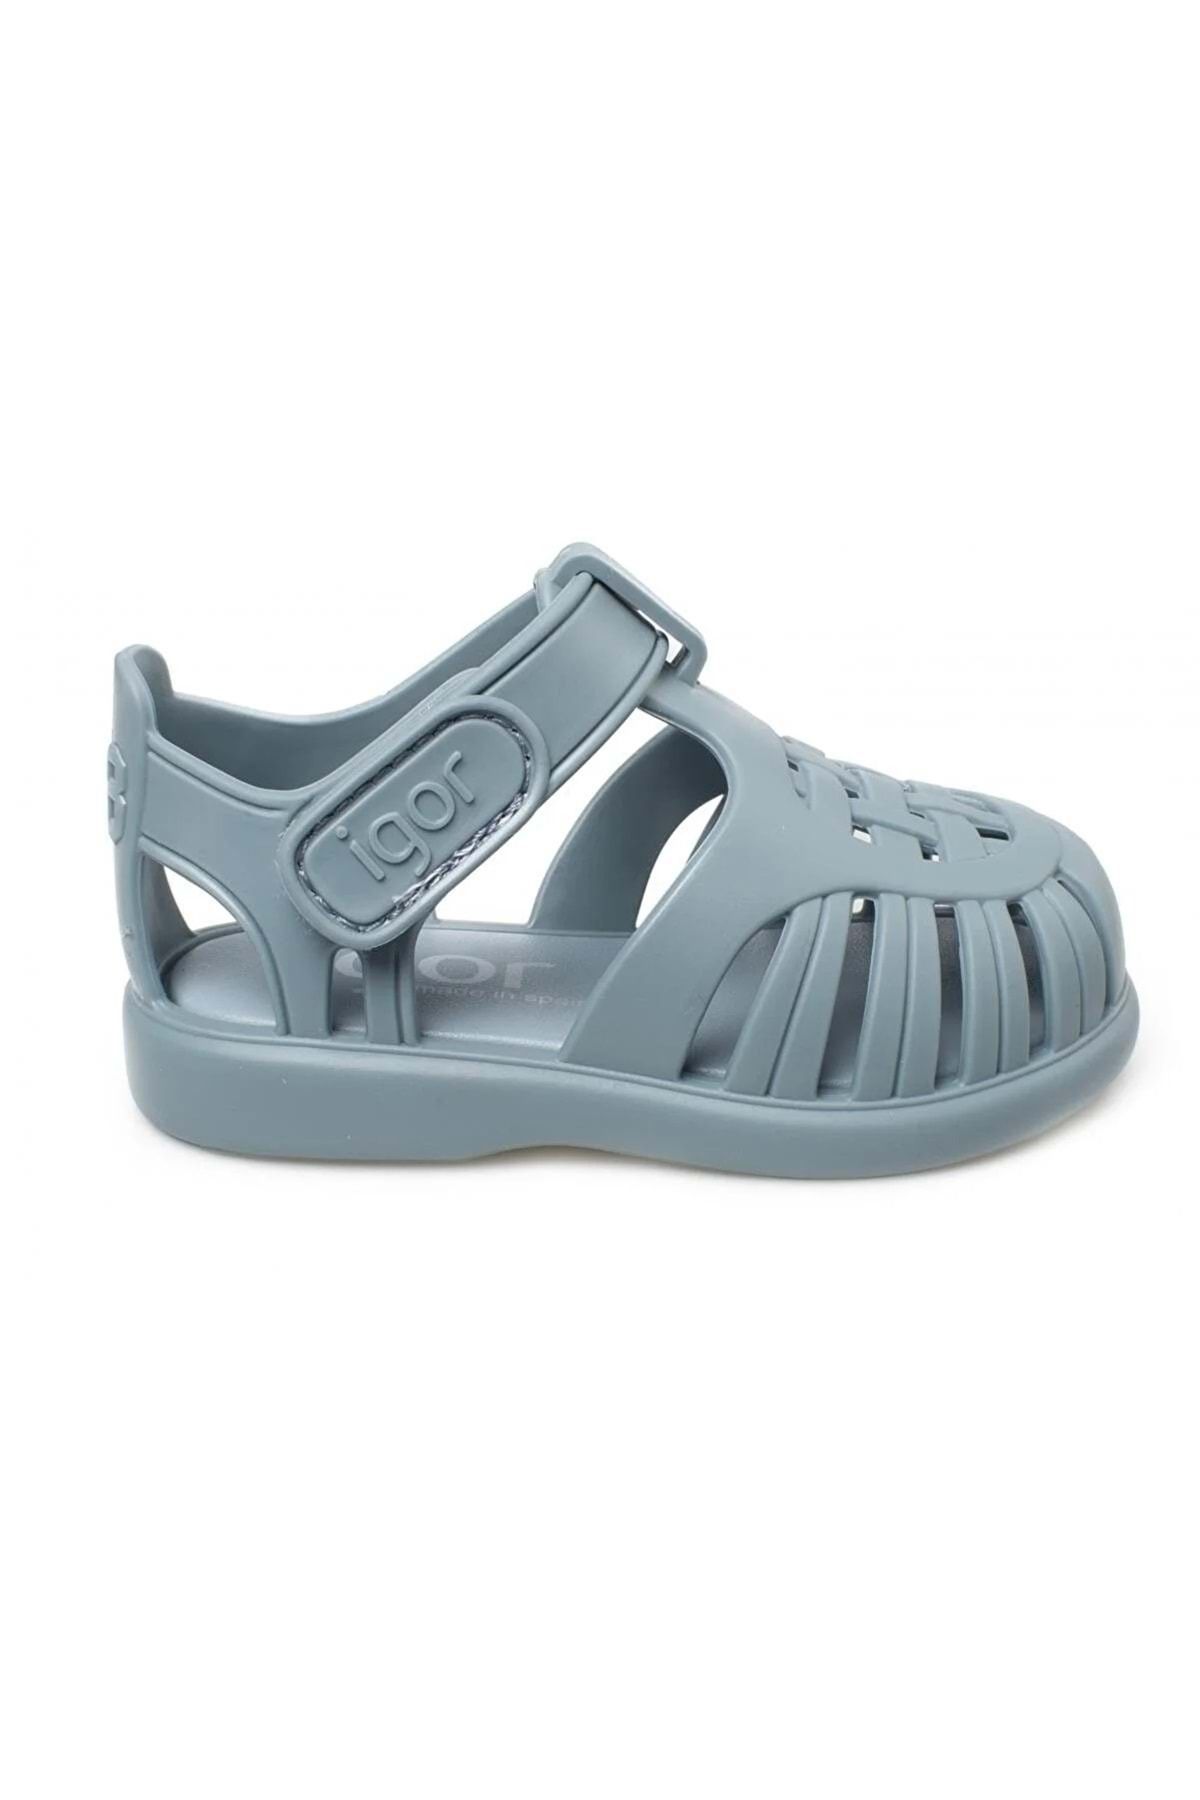 IGOR I?gor S10271 Tobby Solid Çocuk Sandalet